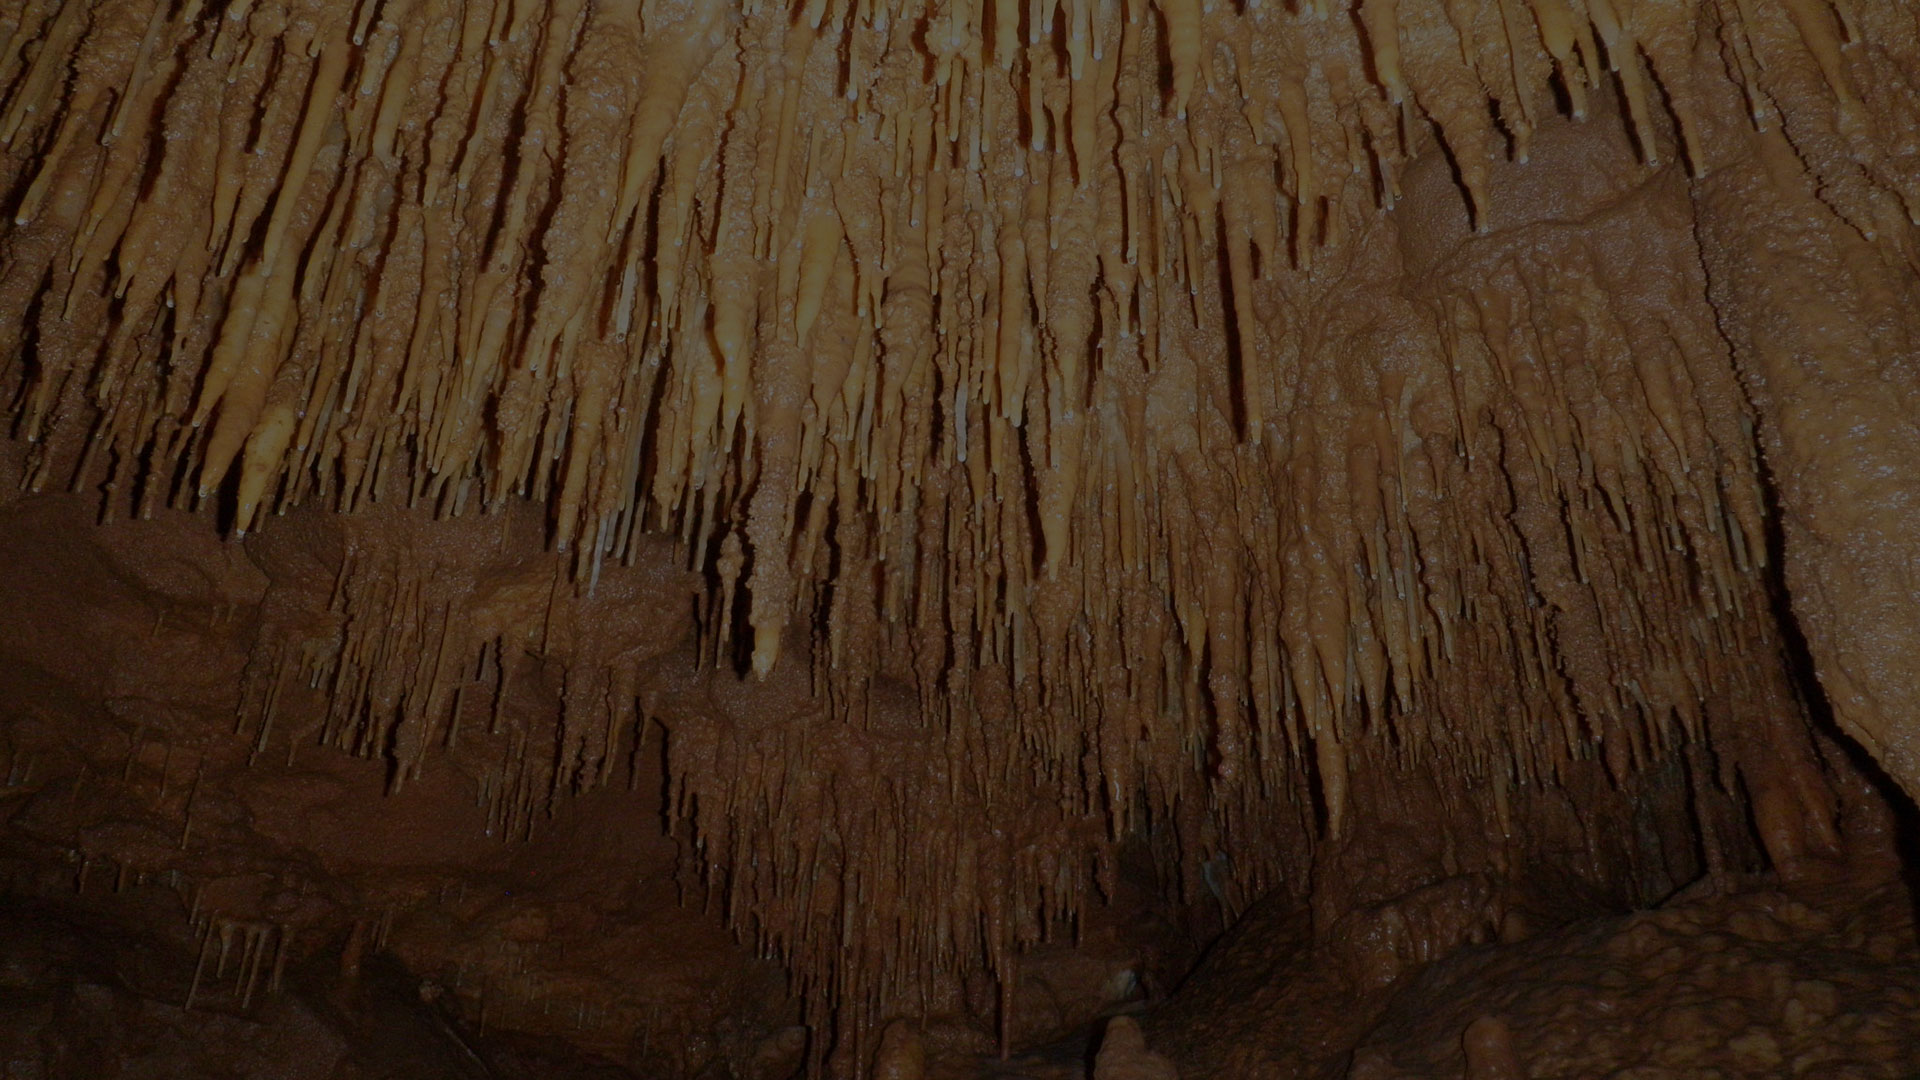 Crystal Cave Springfield Missouri - Fantastic Cave - Exploring Crystal Cave